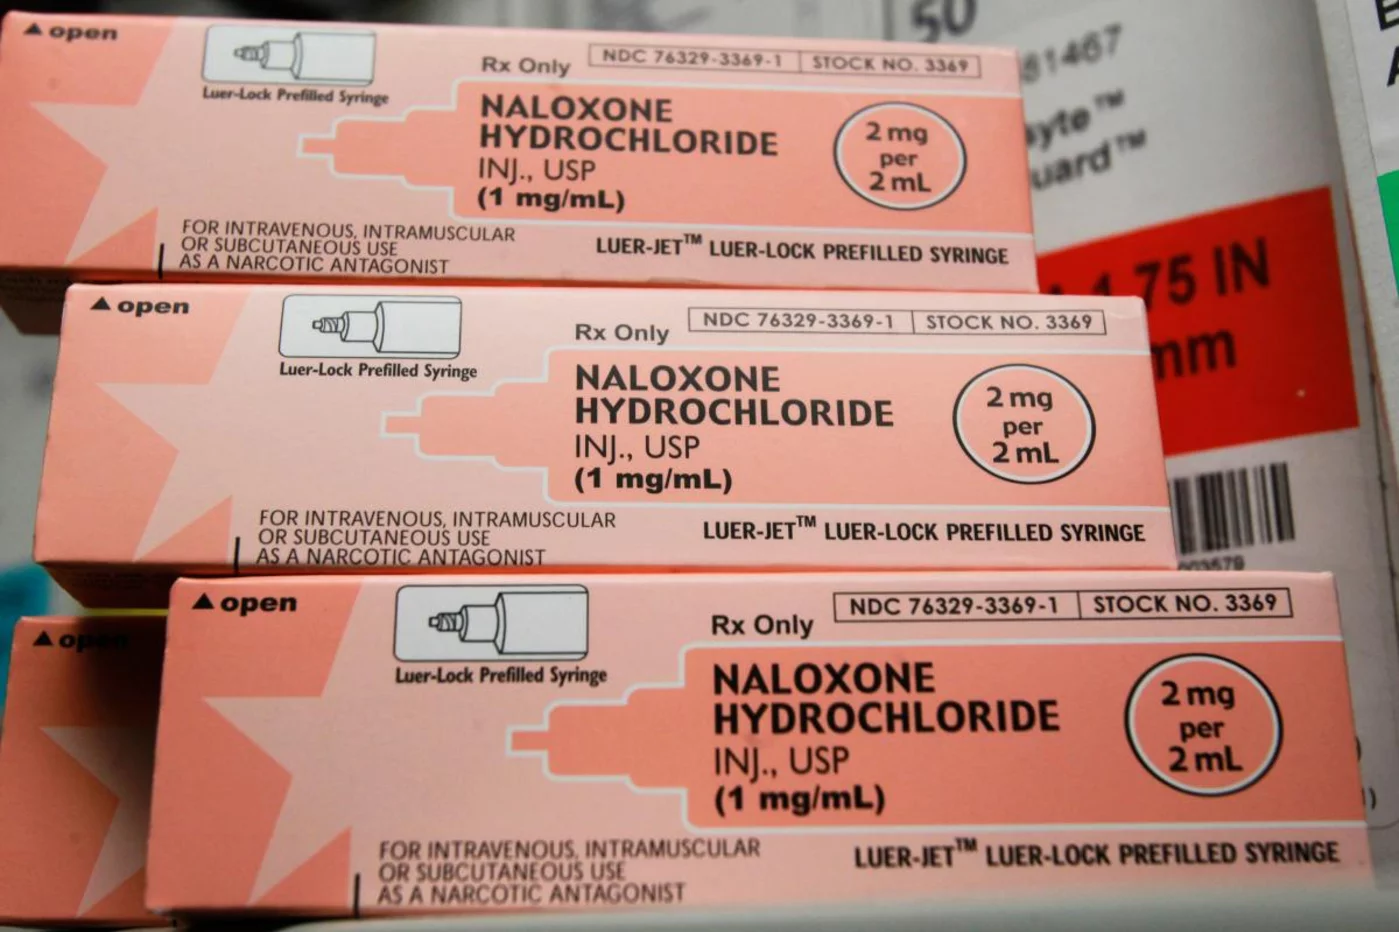 Dosis de naloxona listas para ser distribuidas como antídoto para las sobredosis de fentanilo directamente a los adictos. Foto: TOBY TALBOT